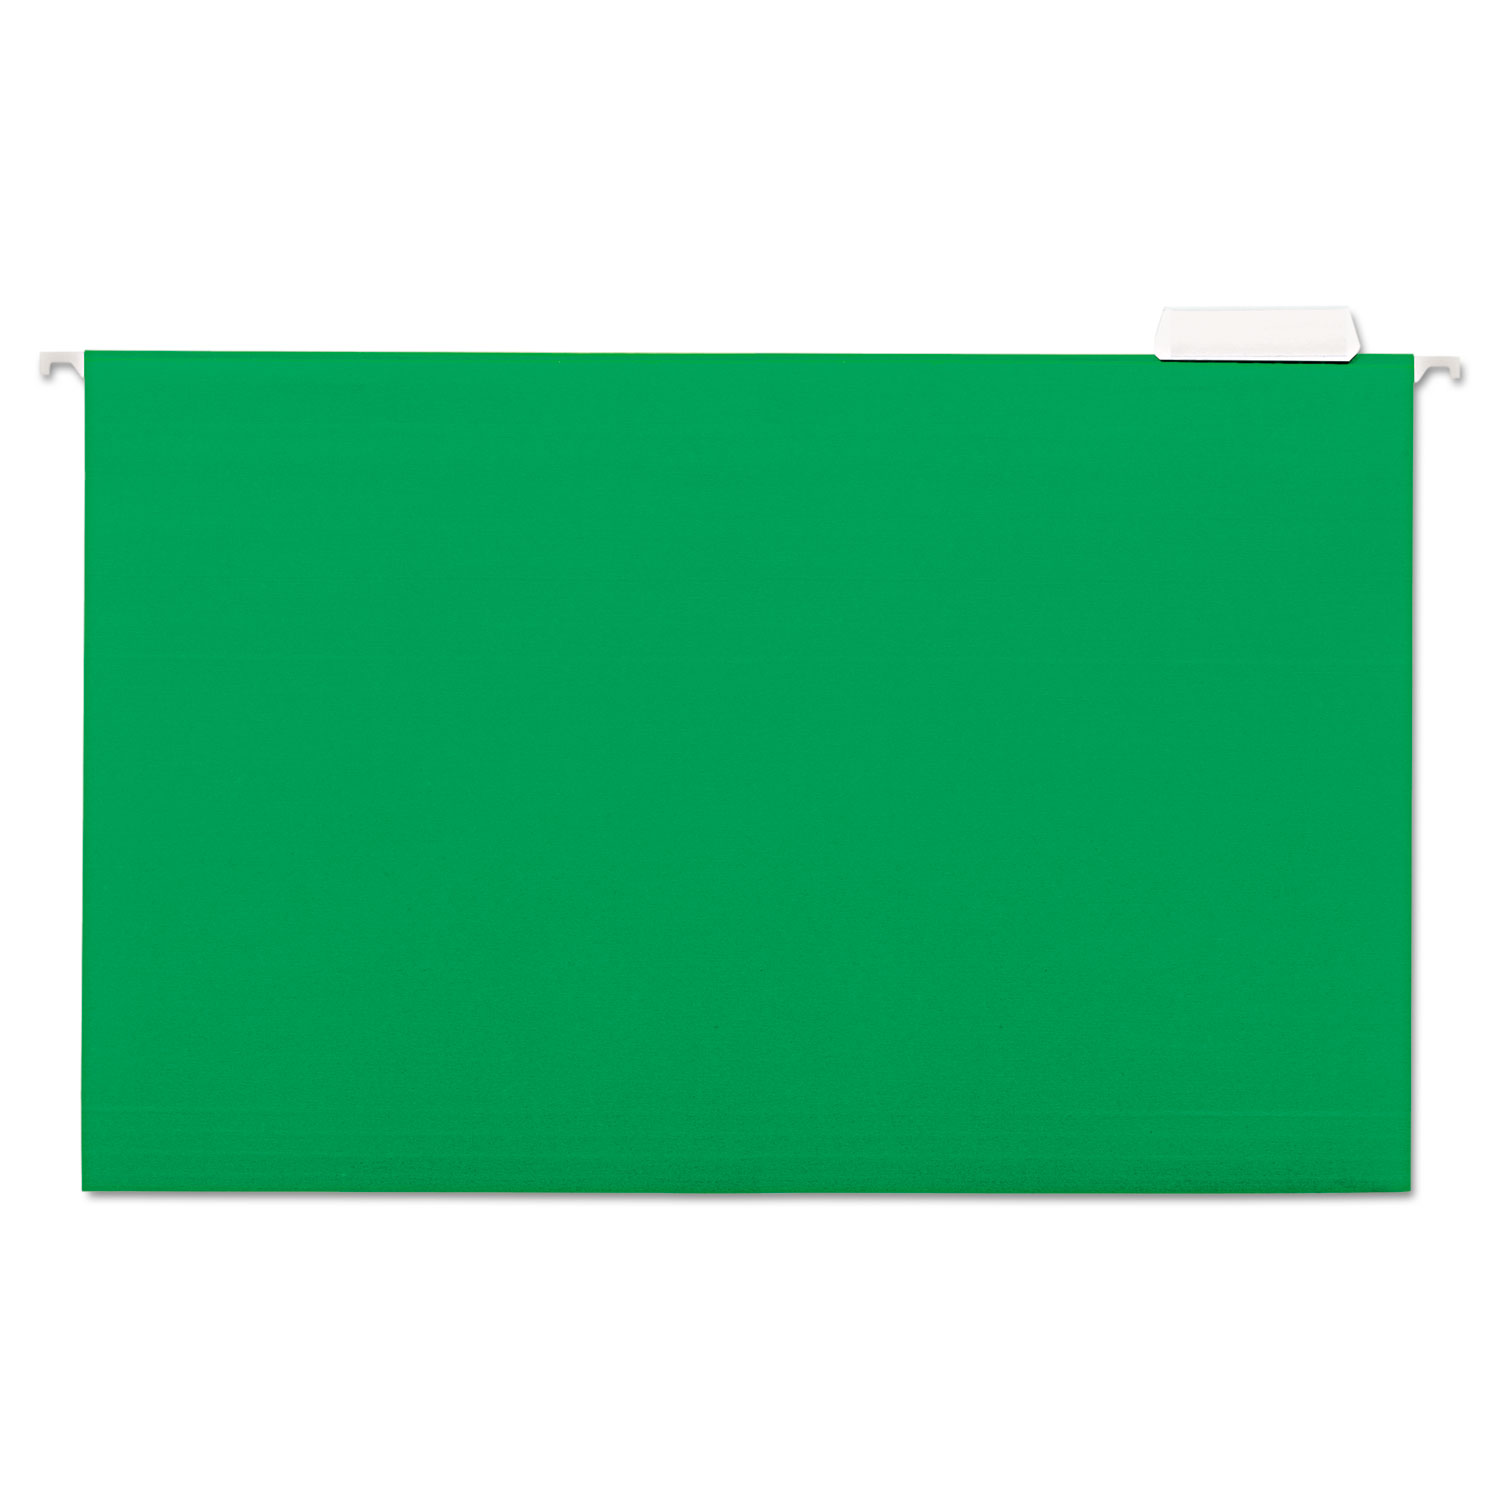 green hanging file folders